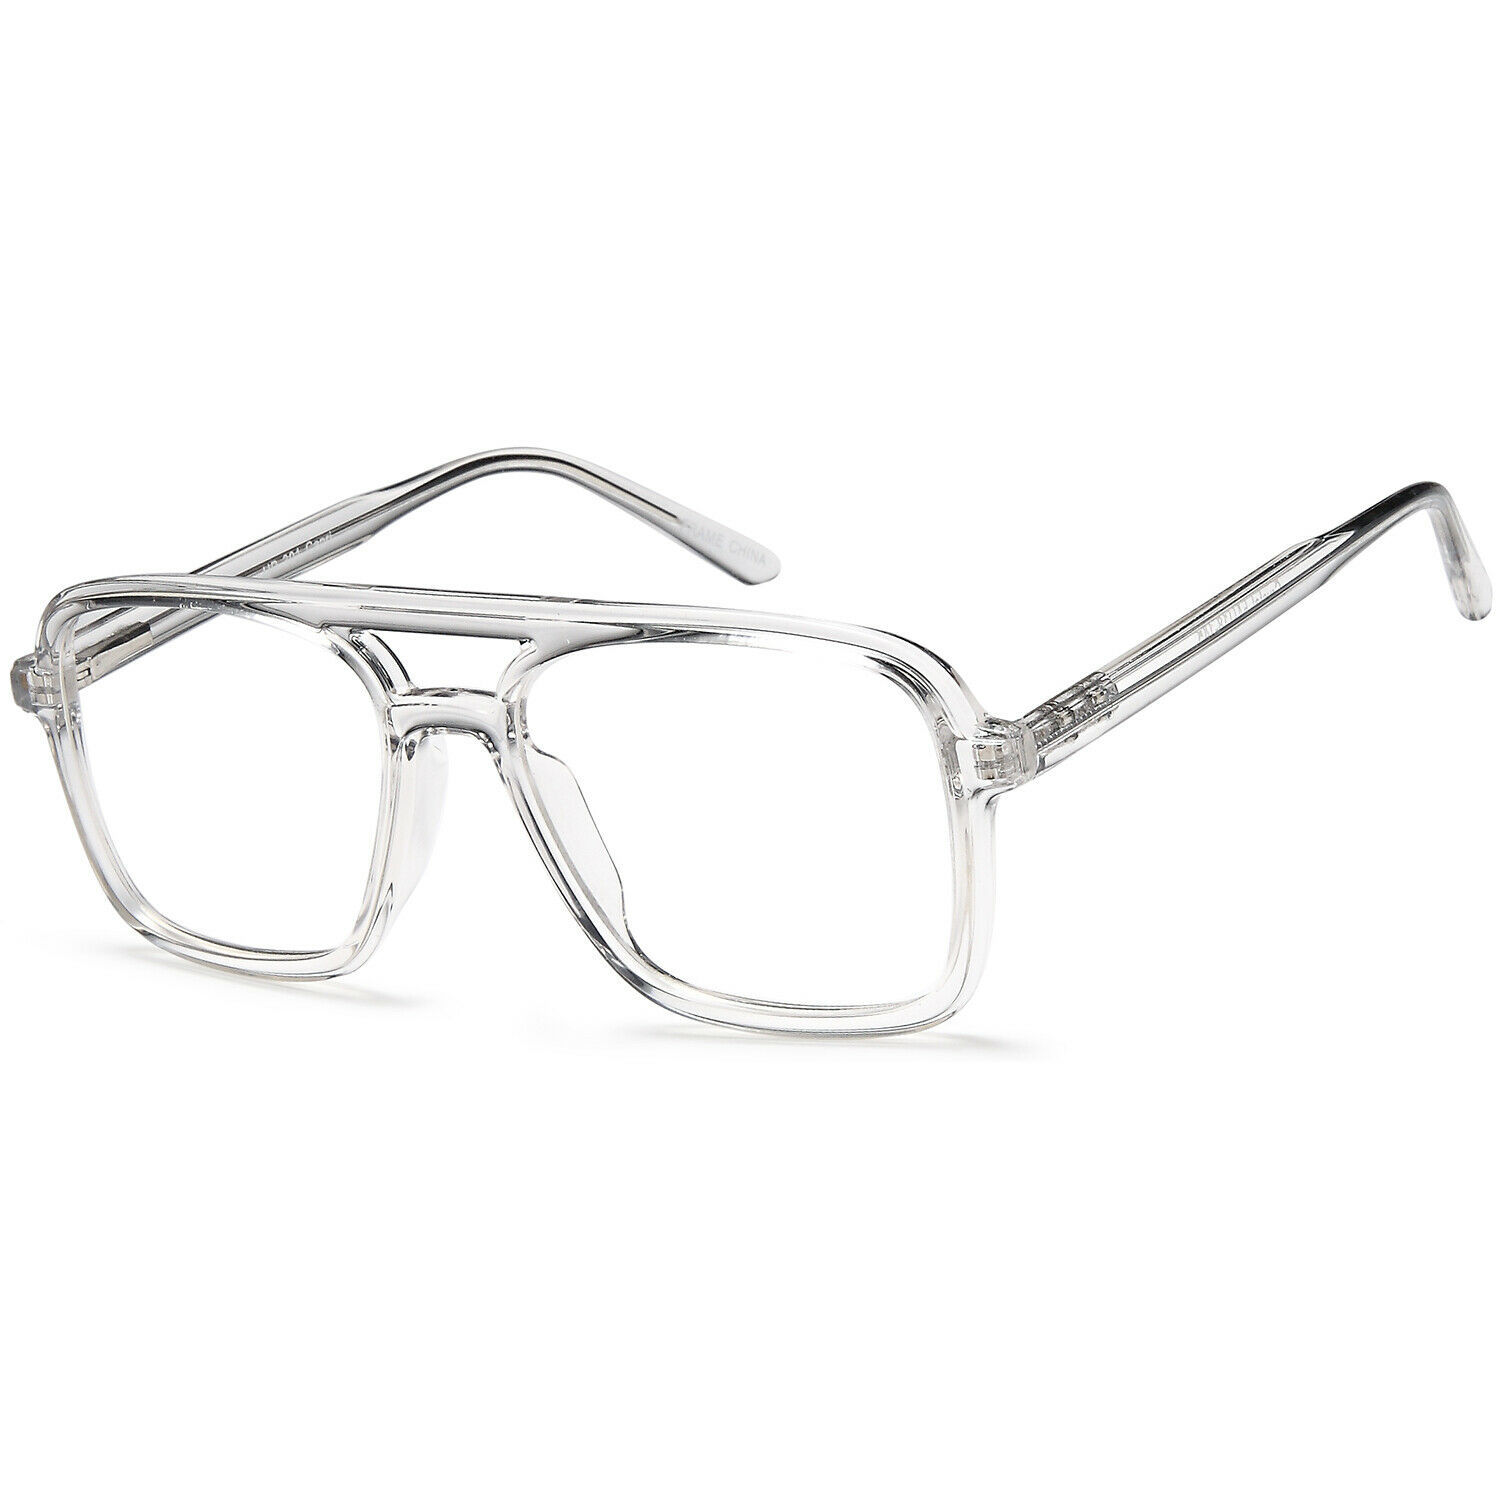 Unisex Eyeglasses 54 18 145 Plastic Eyeglass Frames